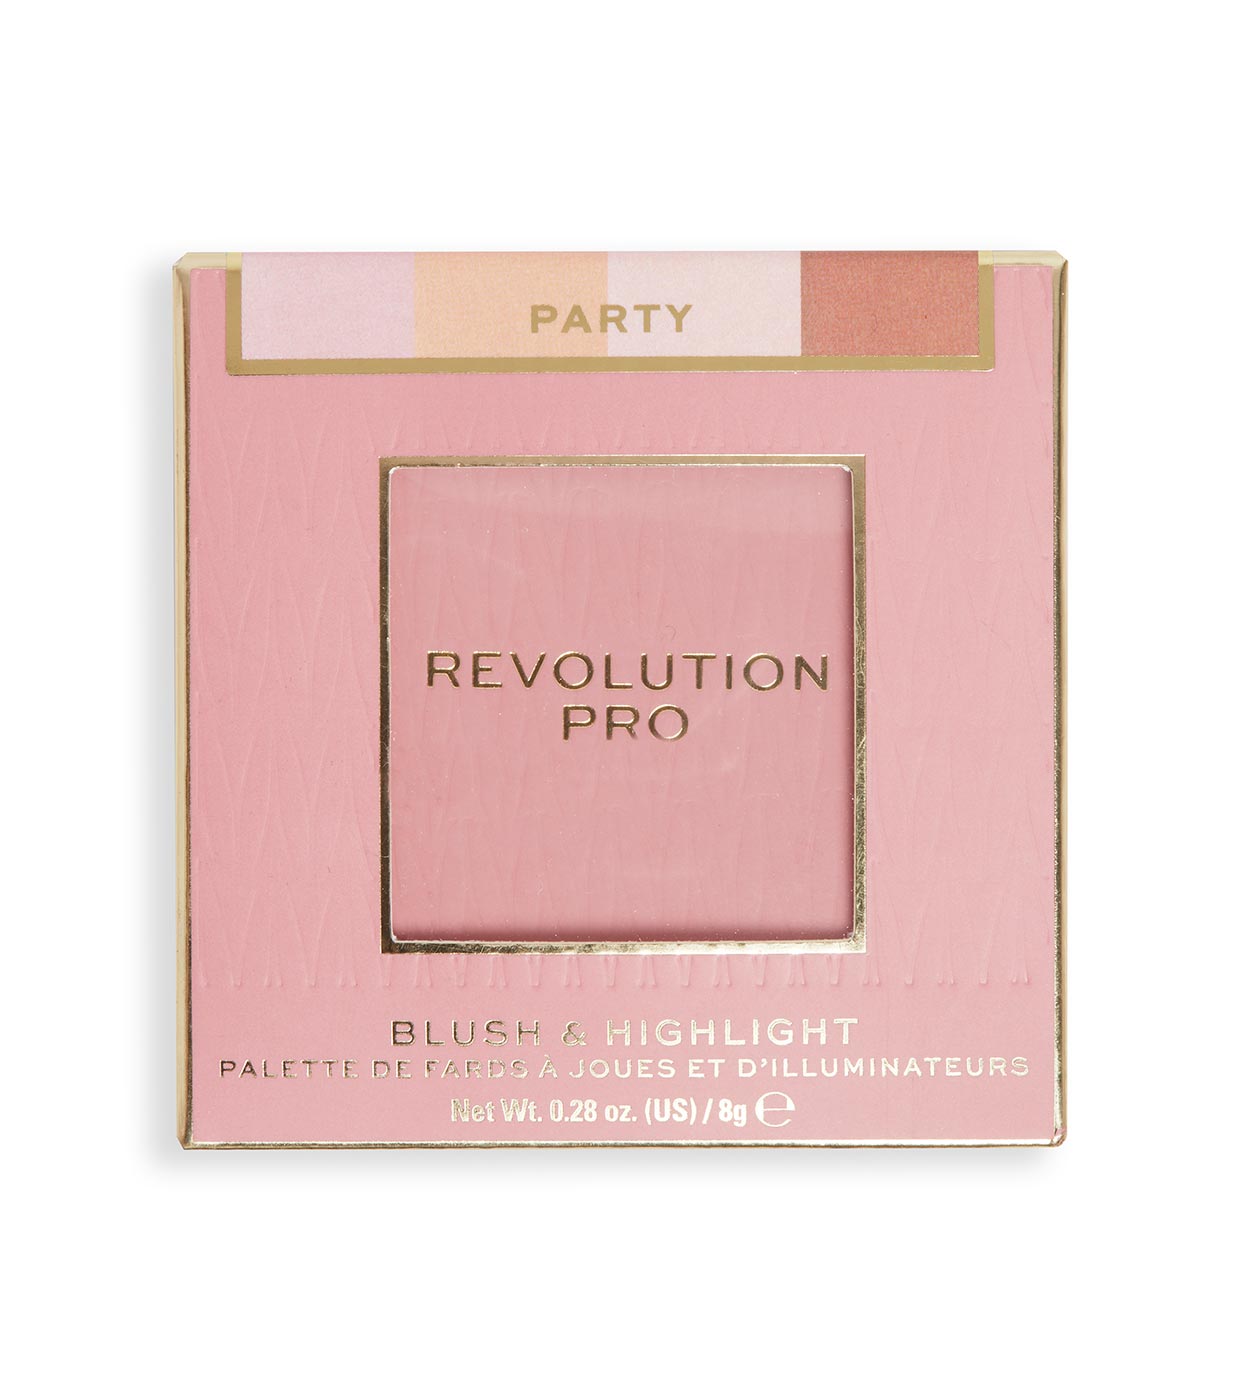 Revolution Pro - *Iconic* - Blush & Highlight Party